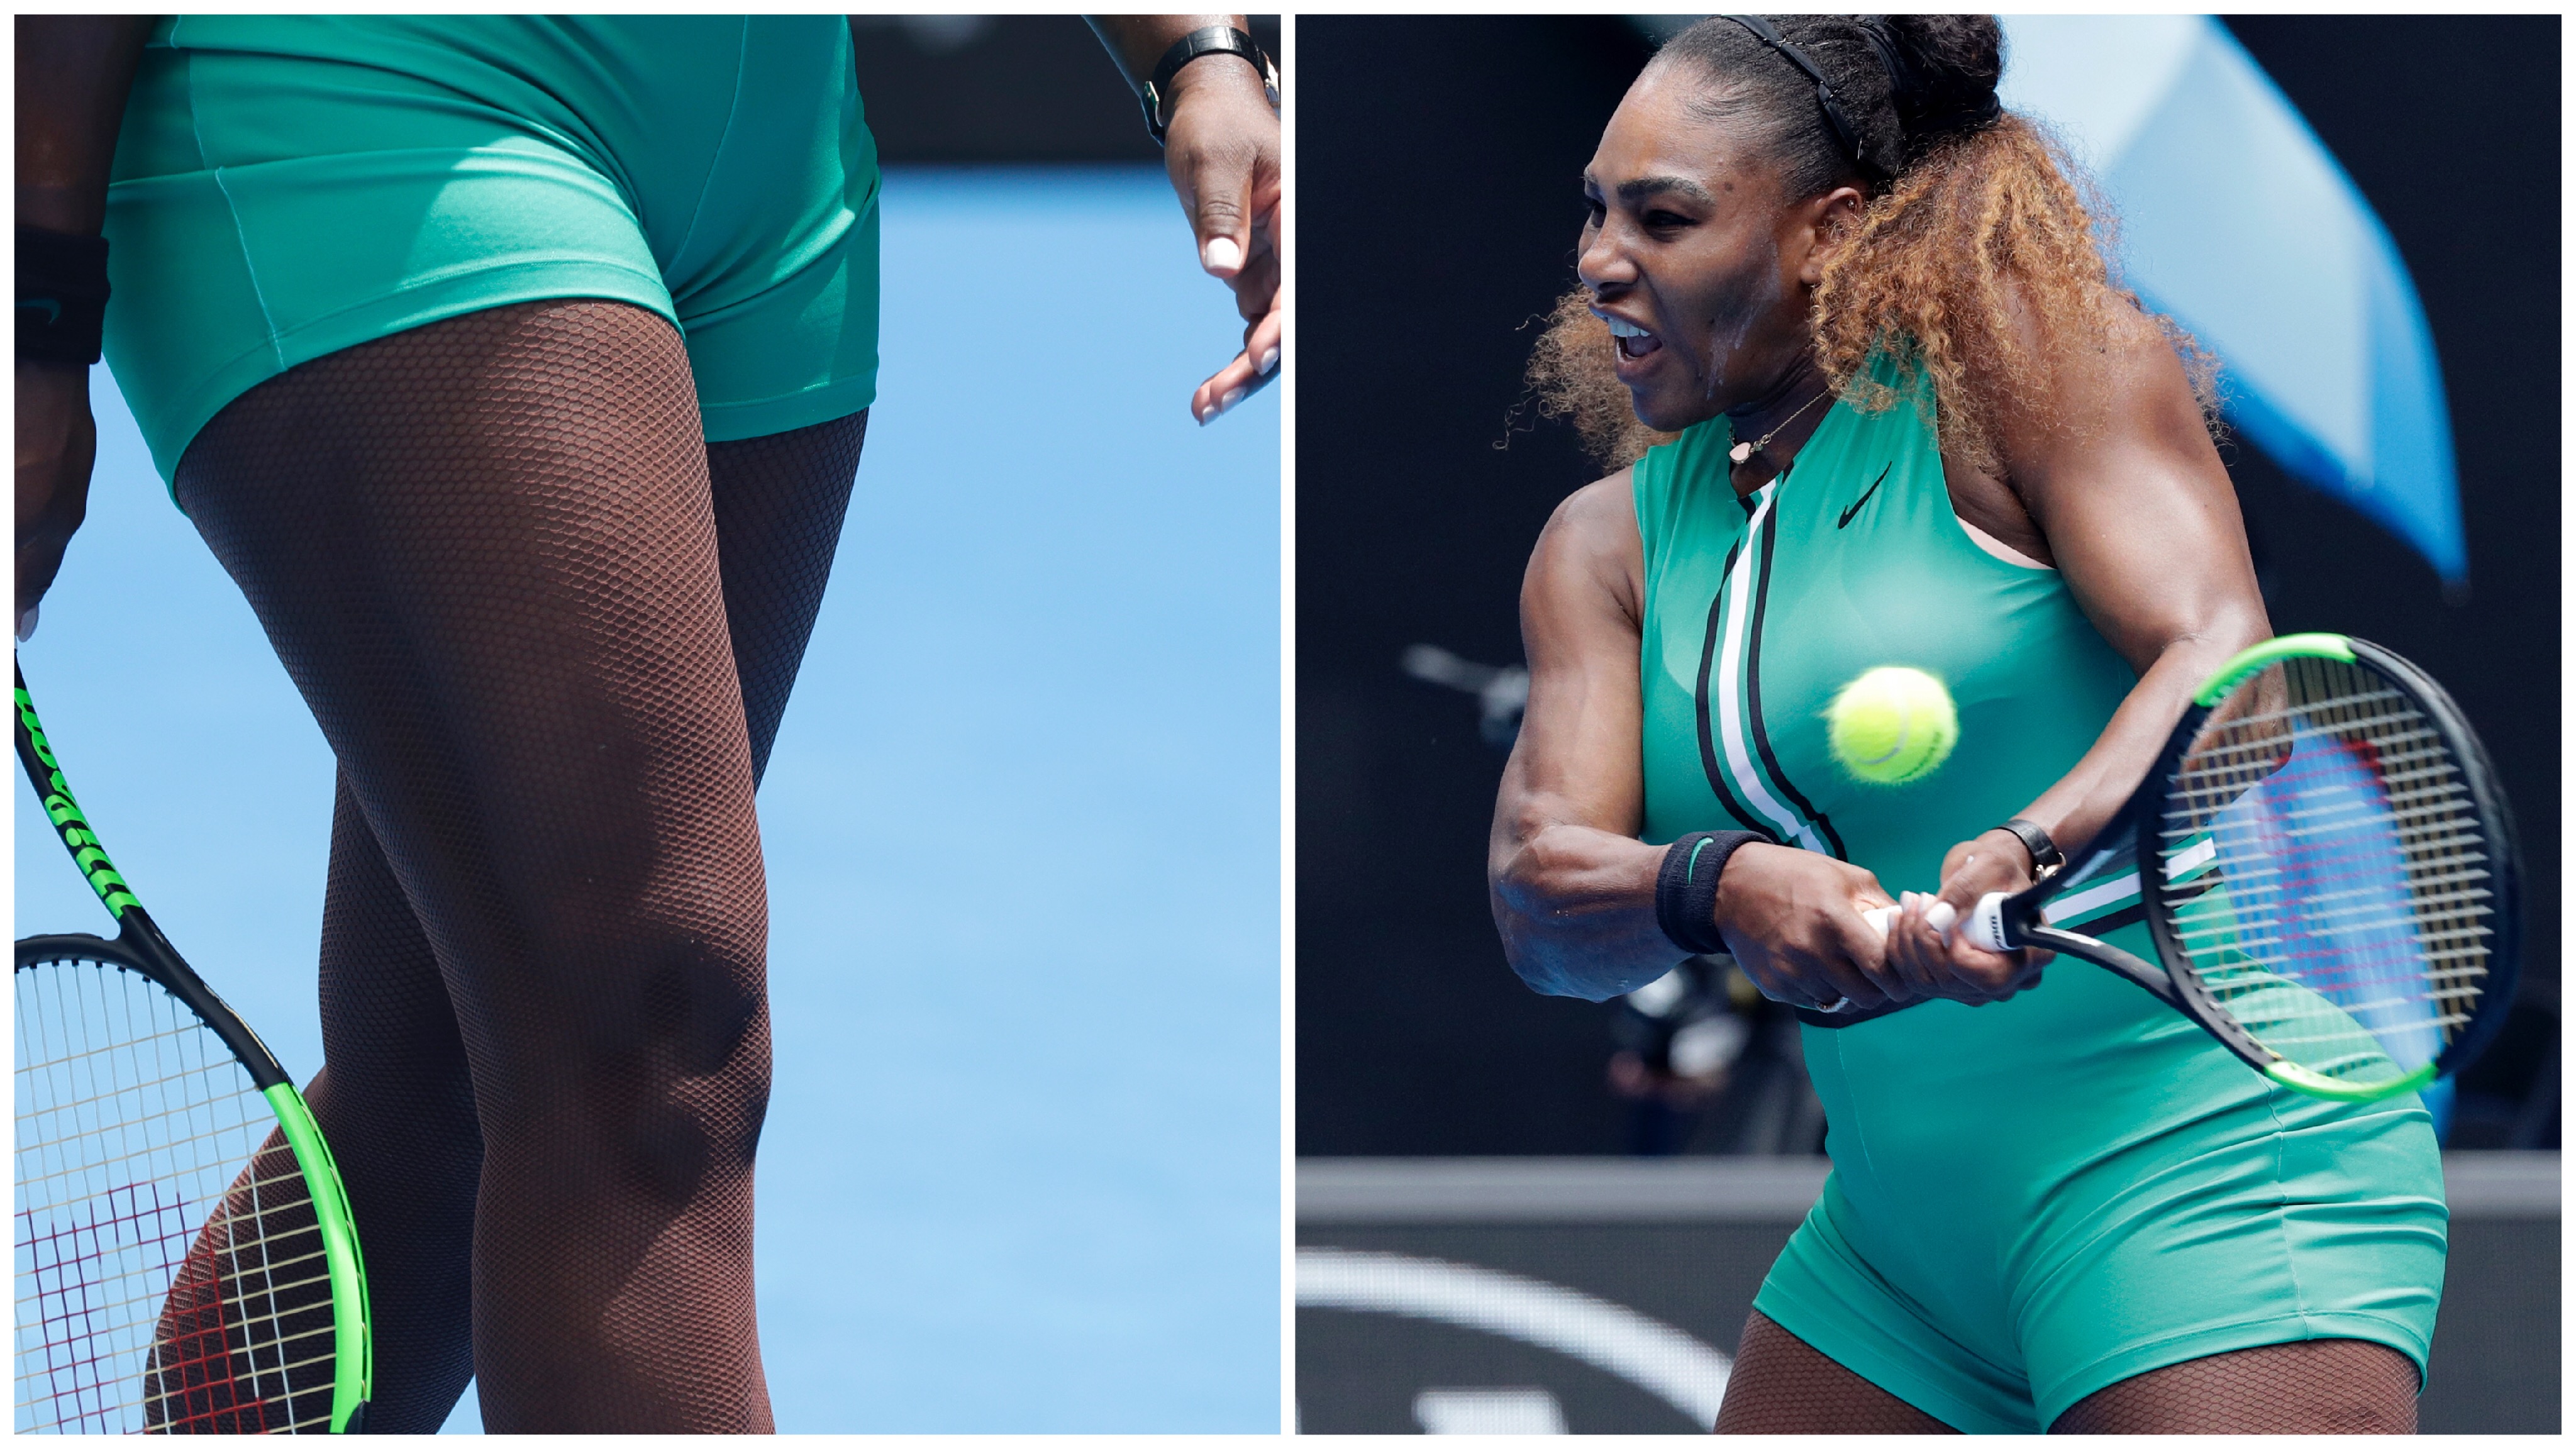 Critican a Serena Williams por usar un body verde con medias